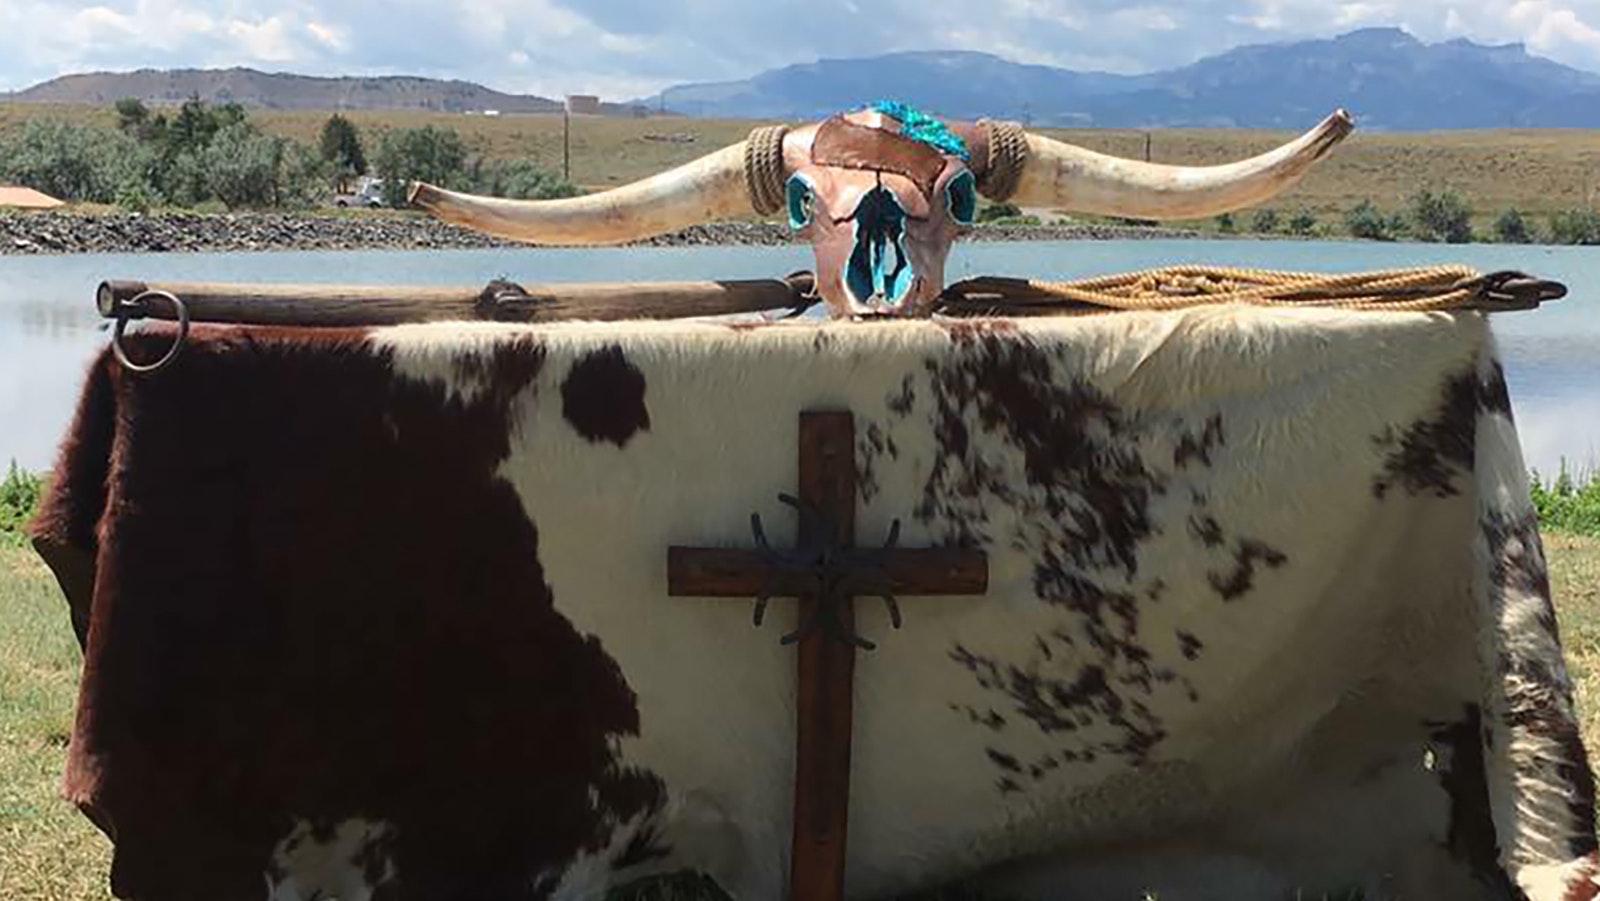 The European mount of this longhorn steer was created by Gelnrock resident Sierra Mortimer.